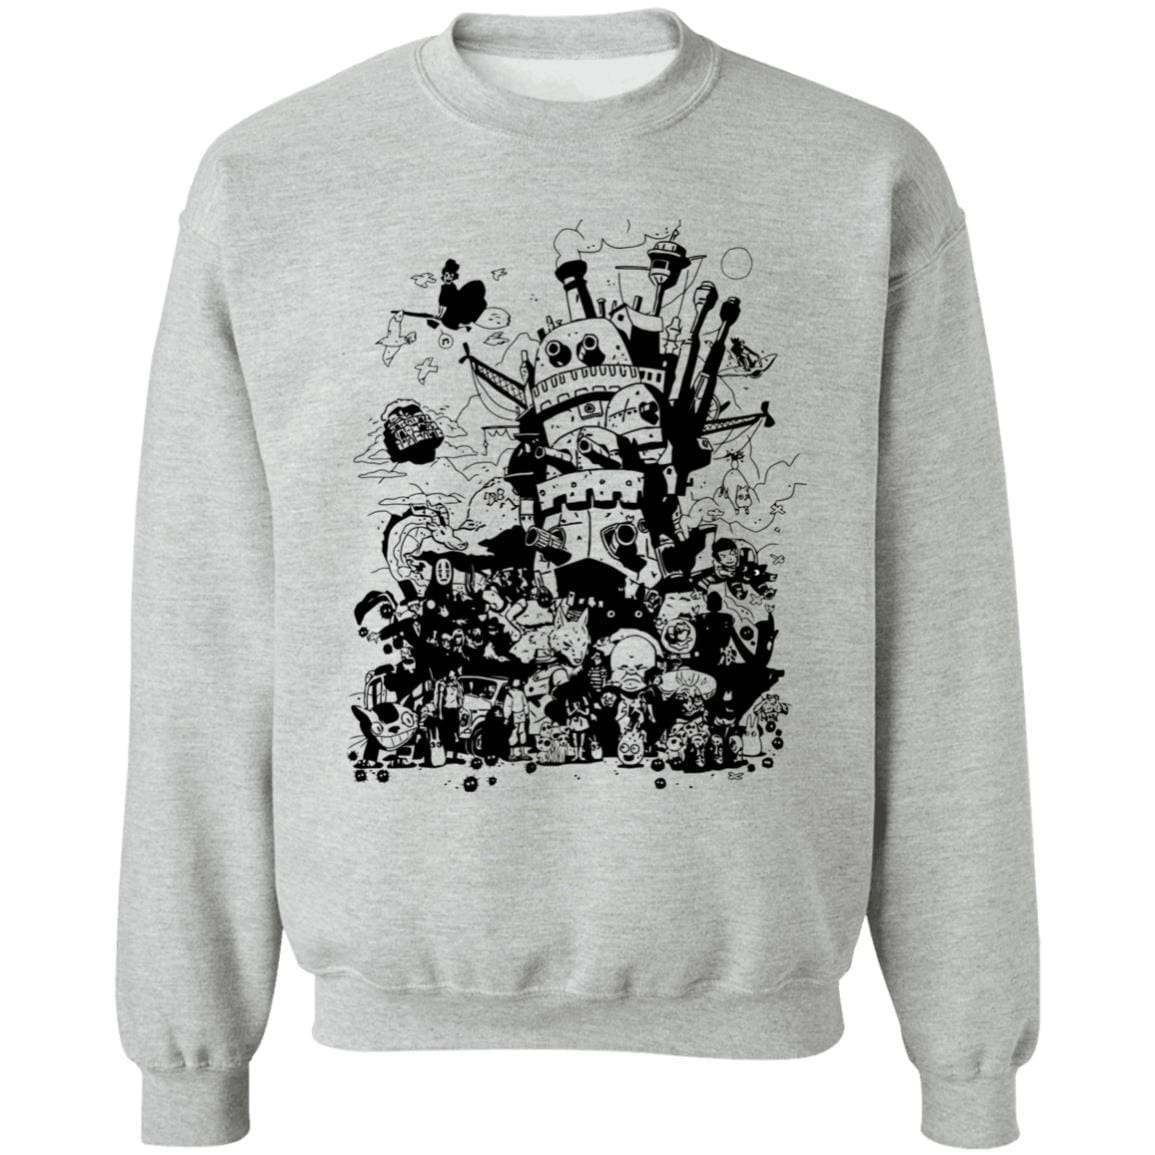 Studio Ghibli Art Collection Black and White Sweatshirt